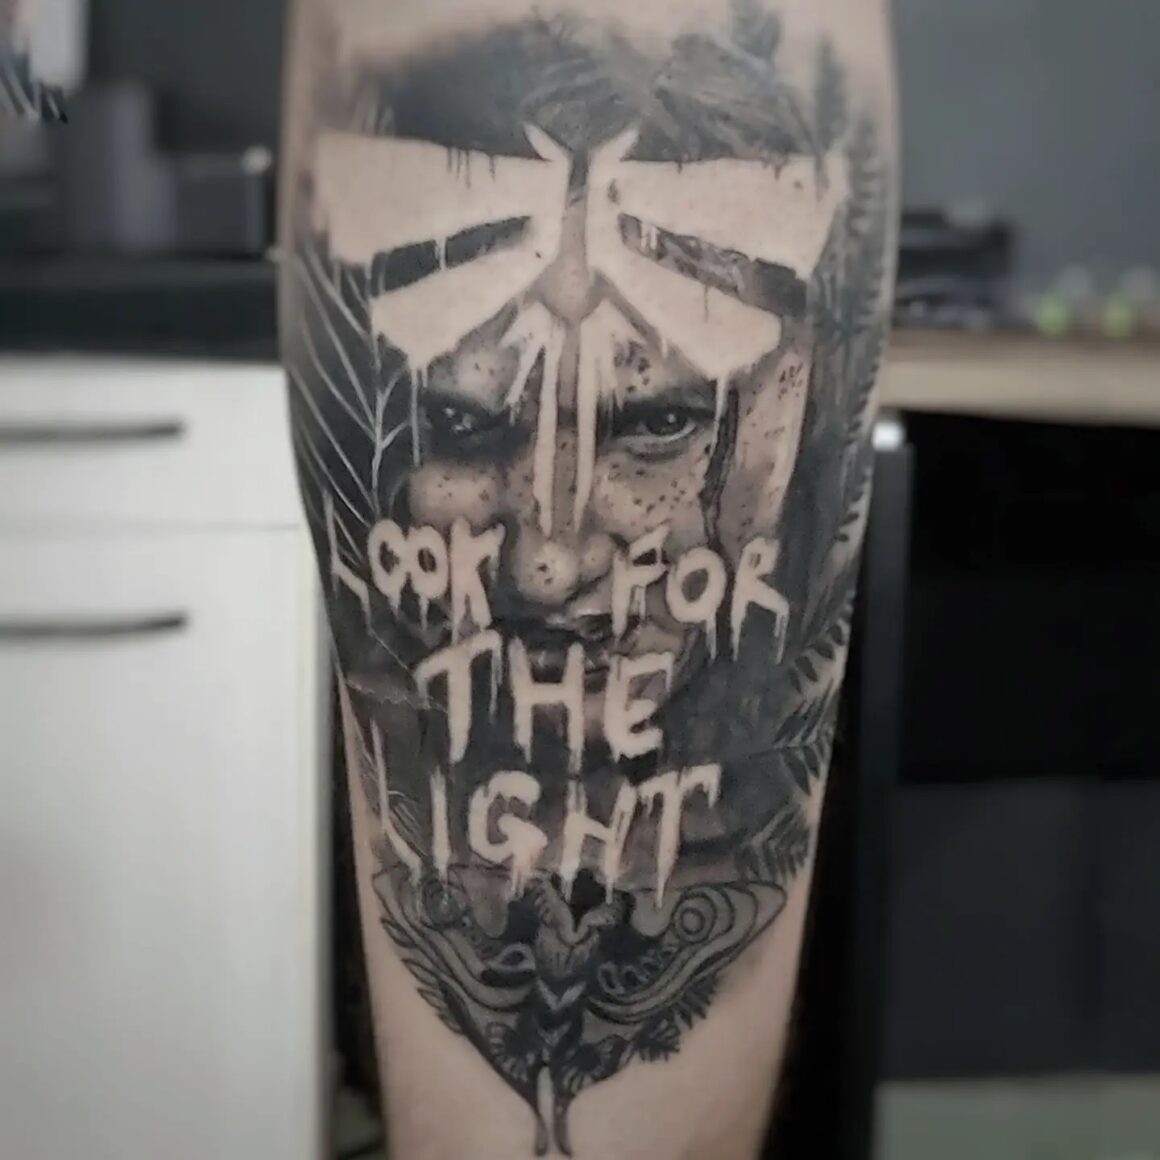 39 The Last Of Us Tattoo Ideas To Admire